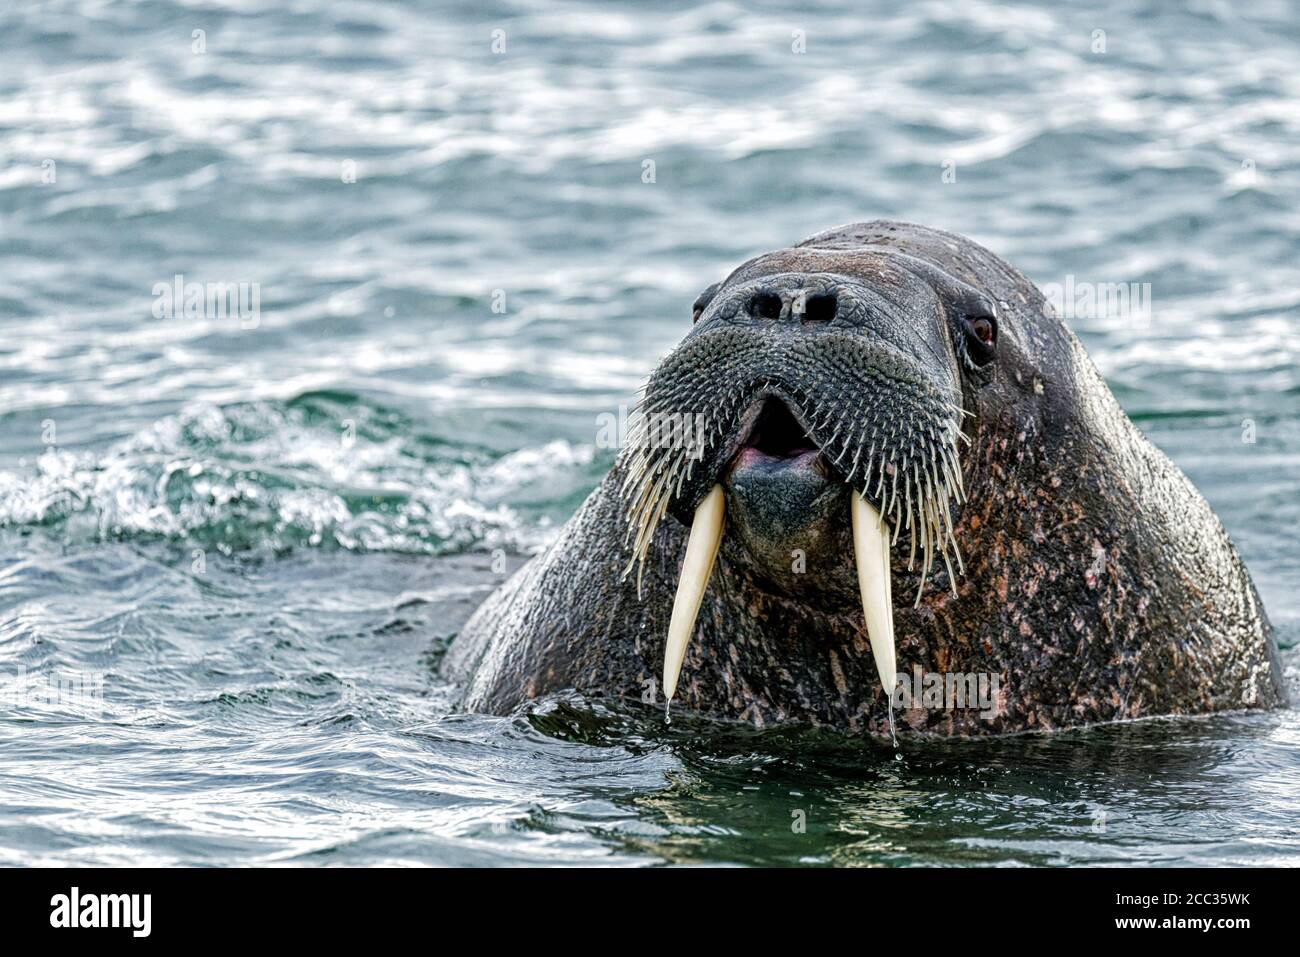 Walrus (Odobenus rosmarus) with open mouth  in sea at Torellnesfjellet, Nordaustlandet, Svalbard, Norway Stock Photo